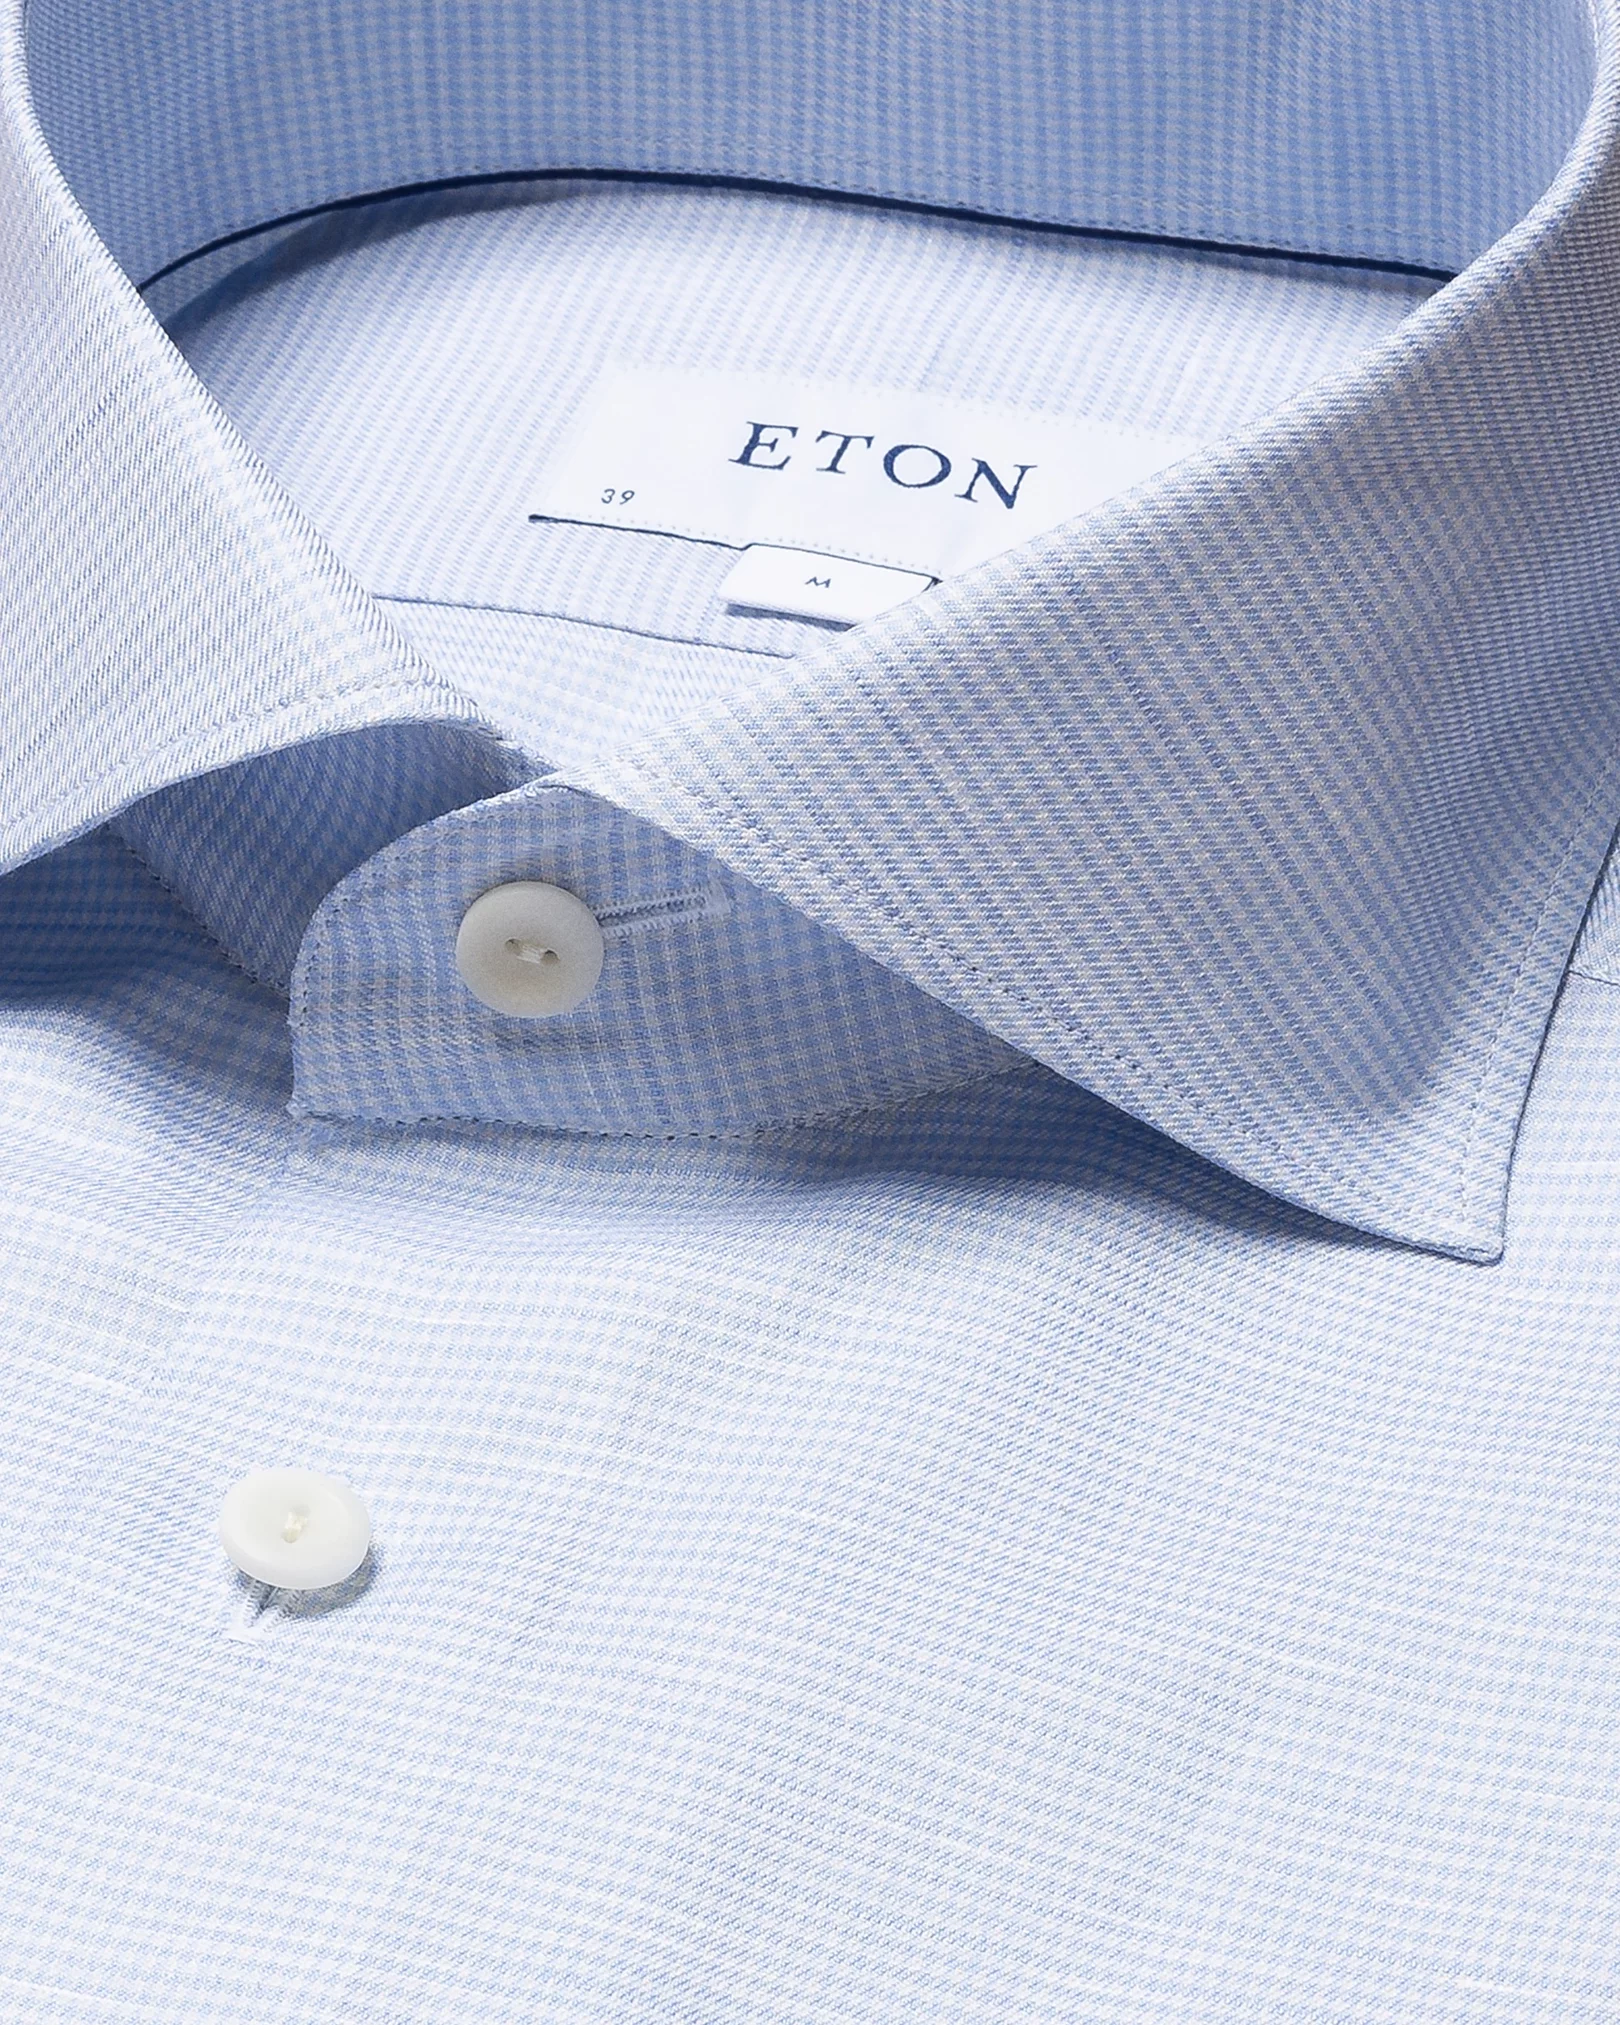 Eton - light blue wrinkle free cotton linen